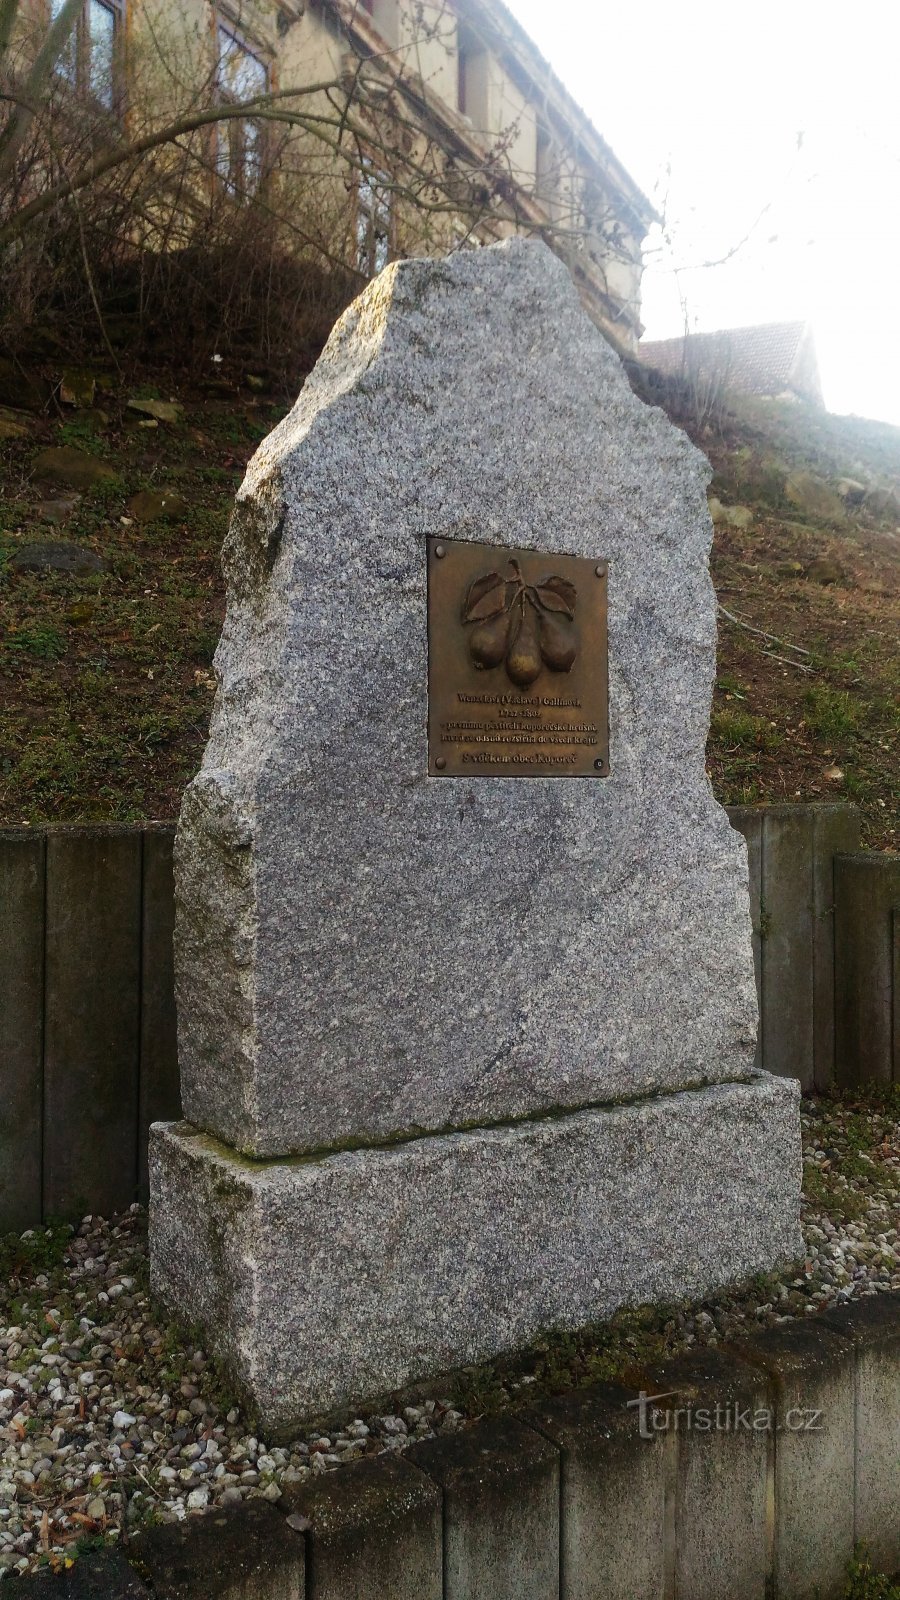 Spomenik Wenzelu Gallini v Koporeču.